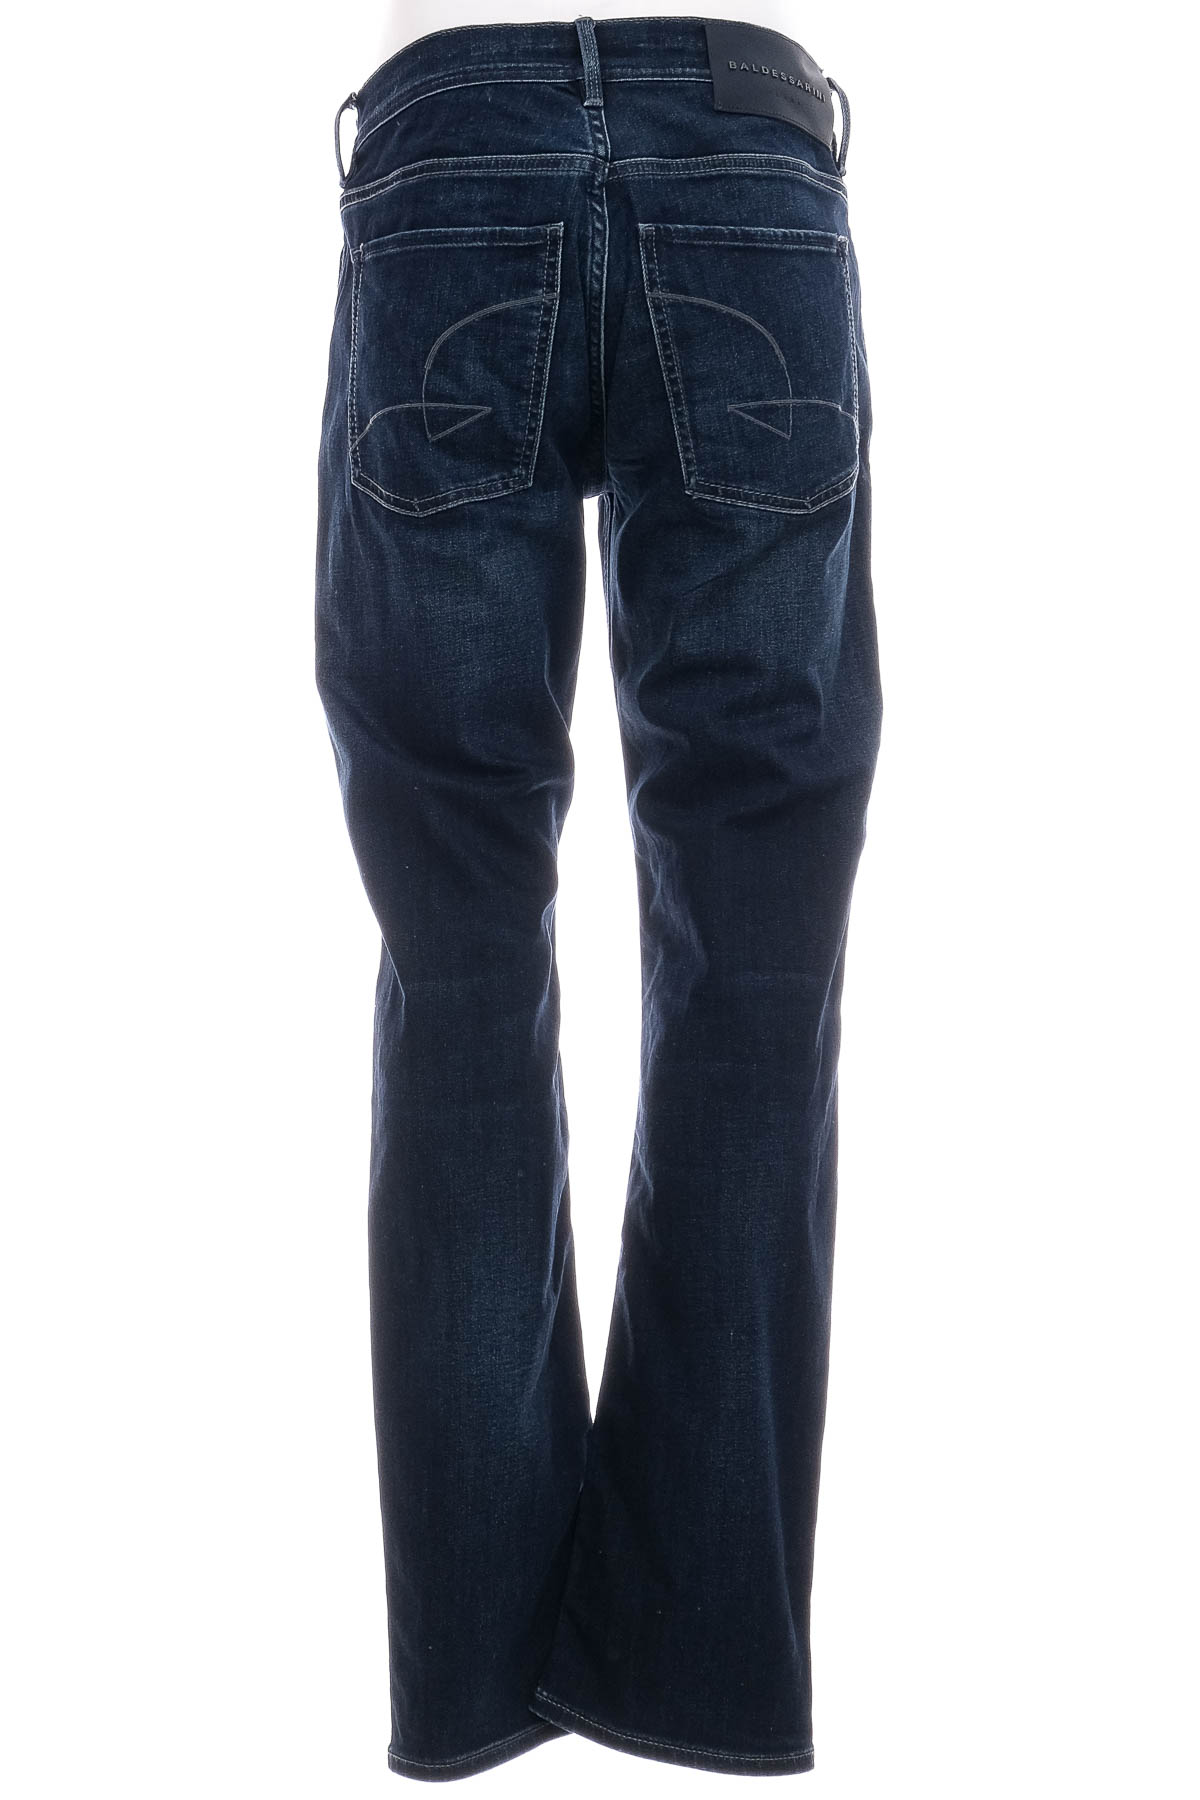 Men's jeans - Baldessarini - 1